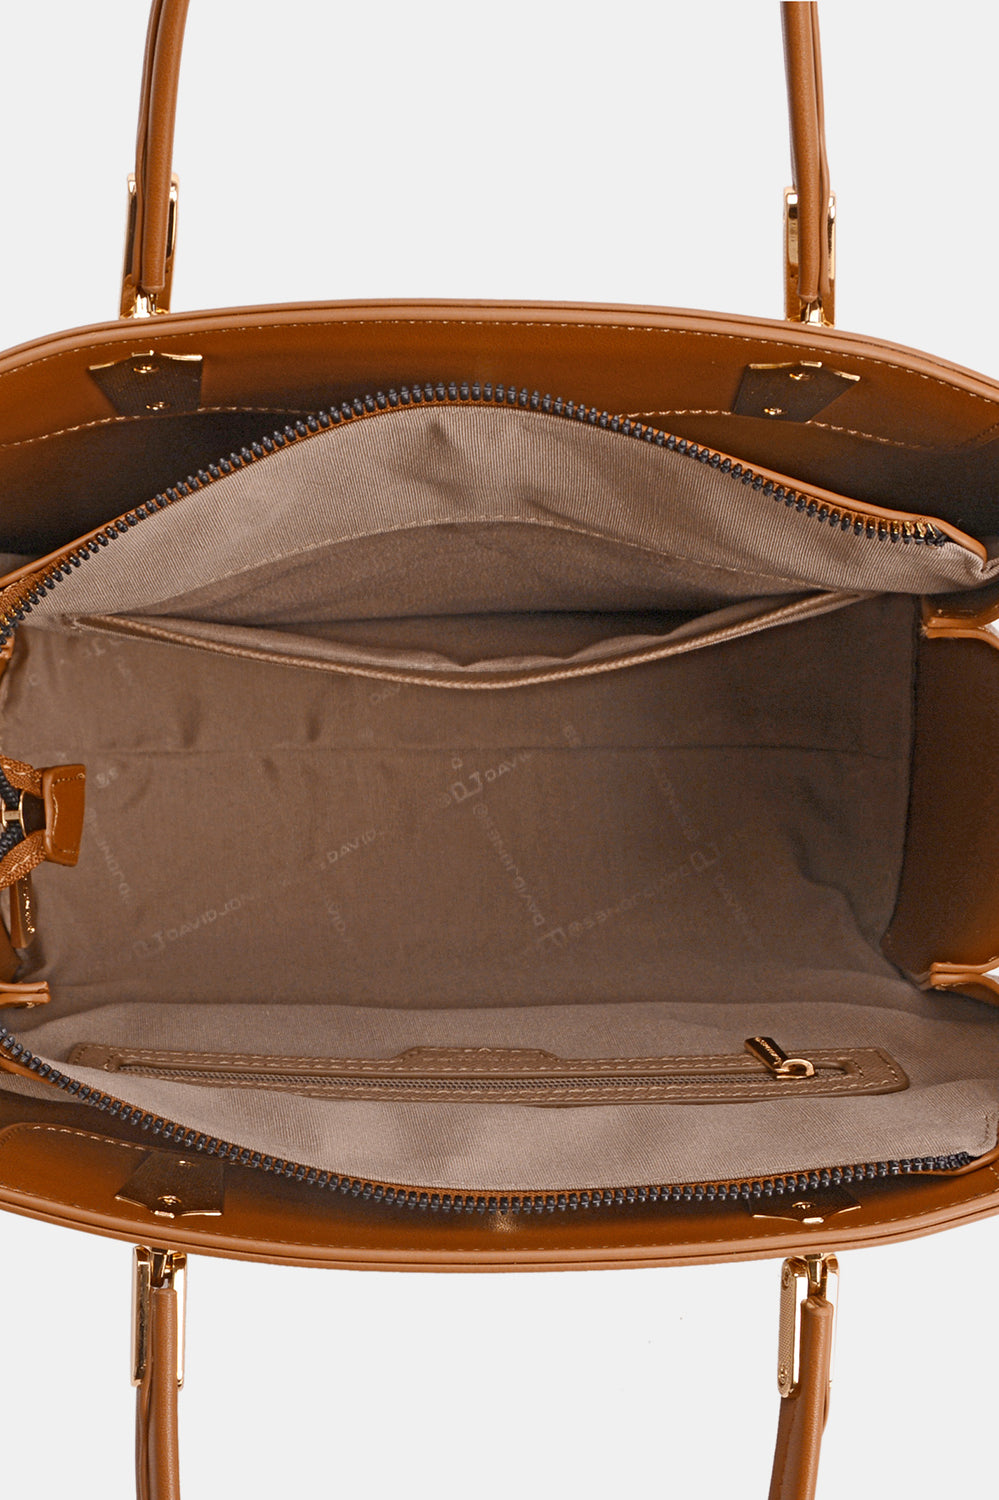 David Jones PU Leather Medium Handbag Trendsi